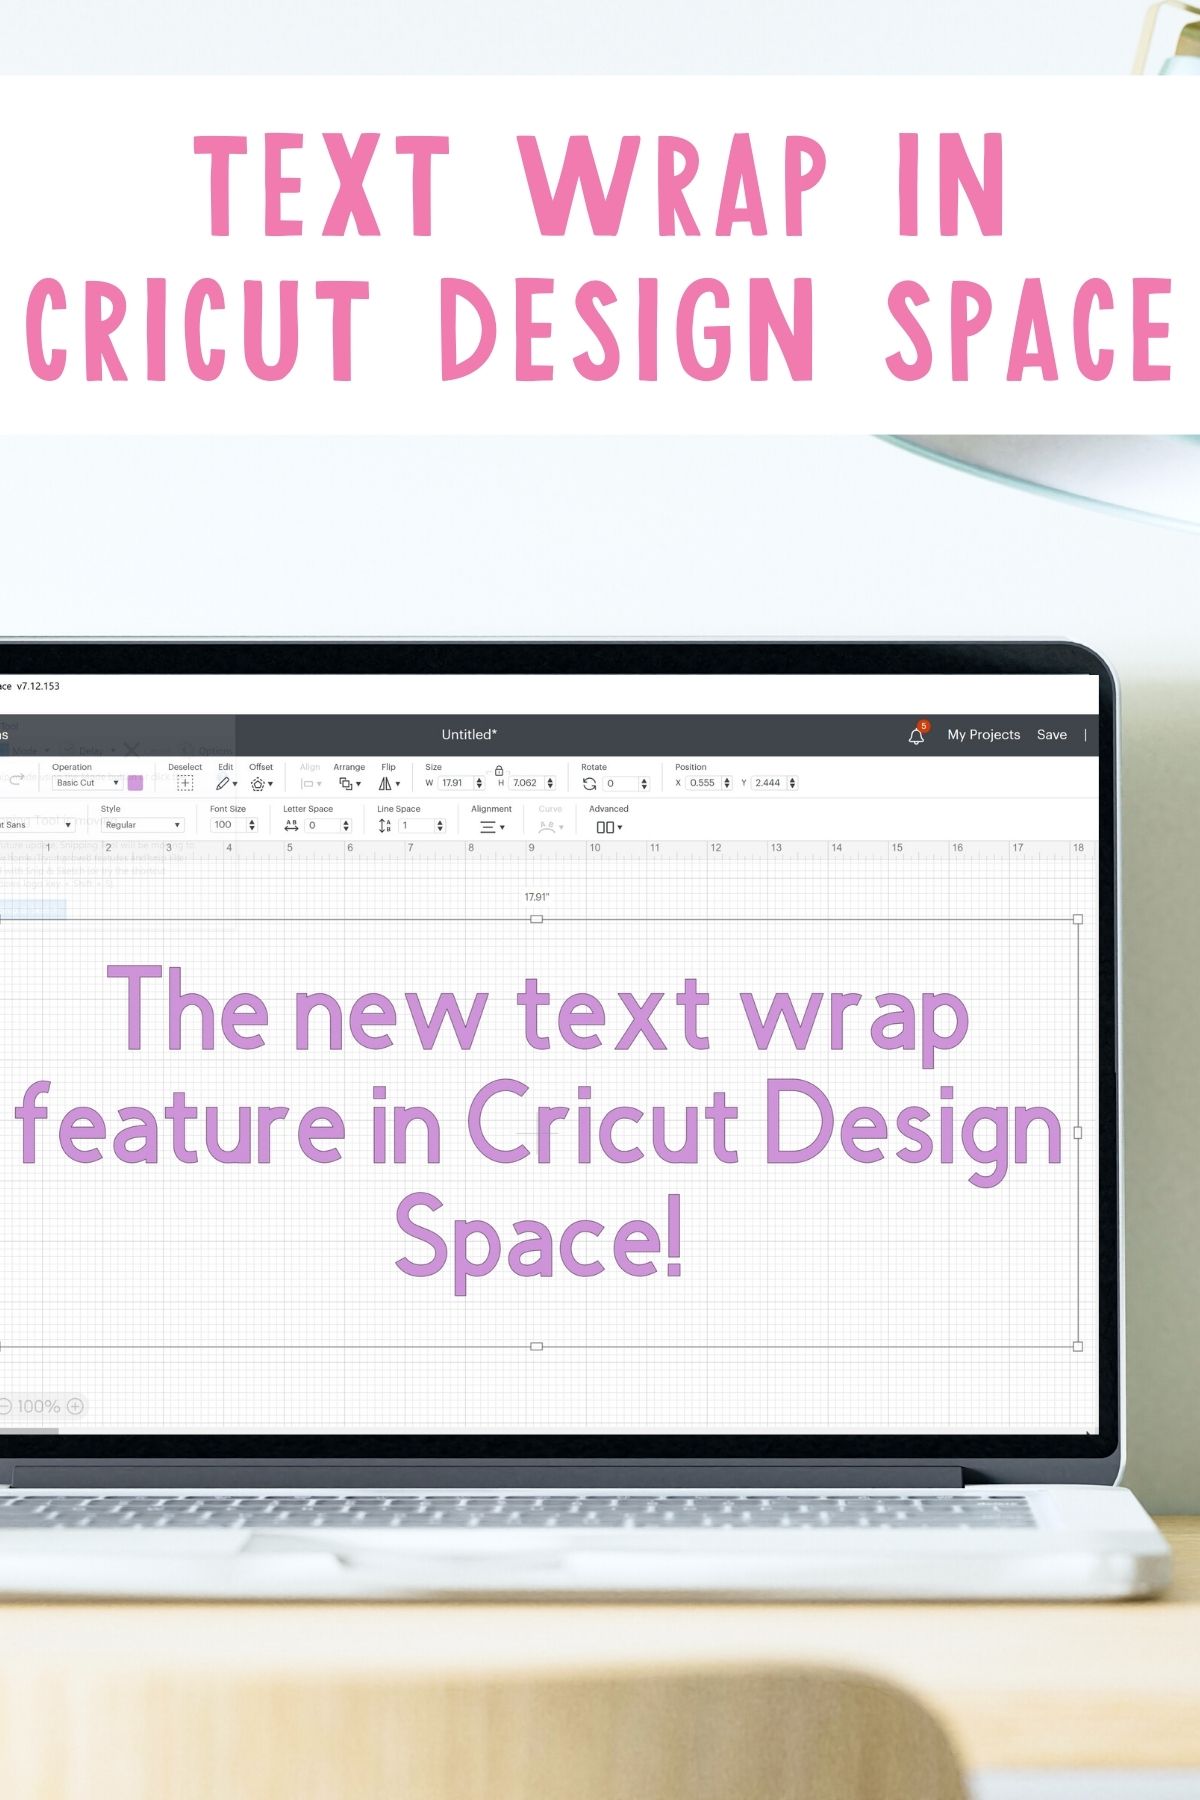 Wrap text in a high image Cricut Design Space.